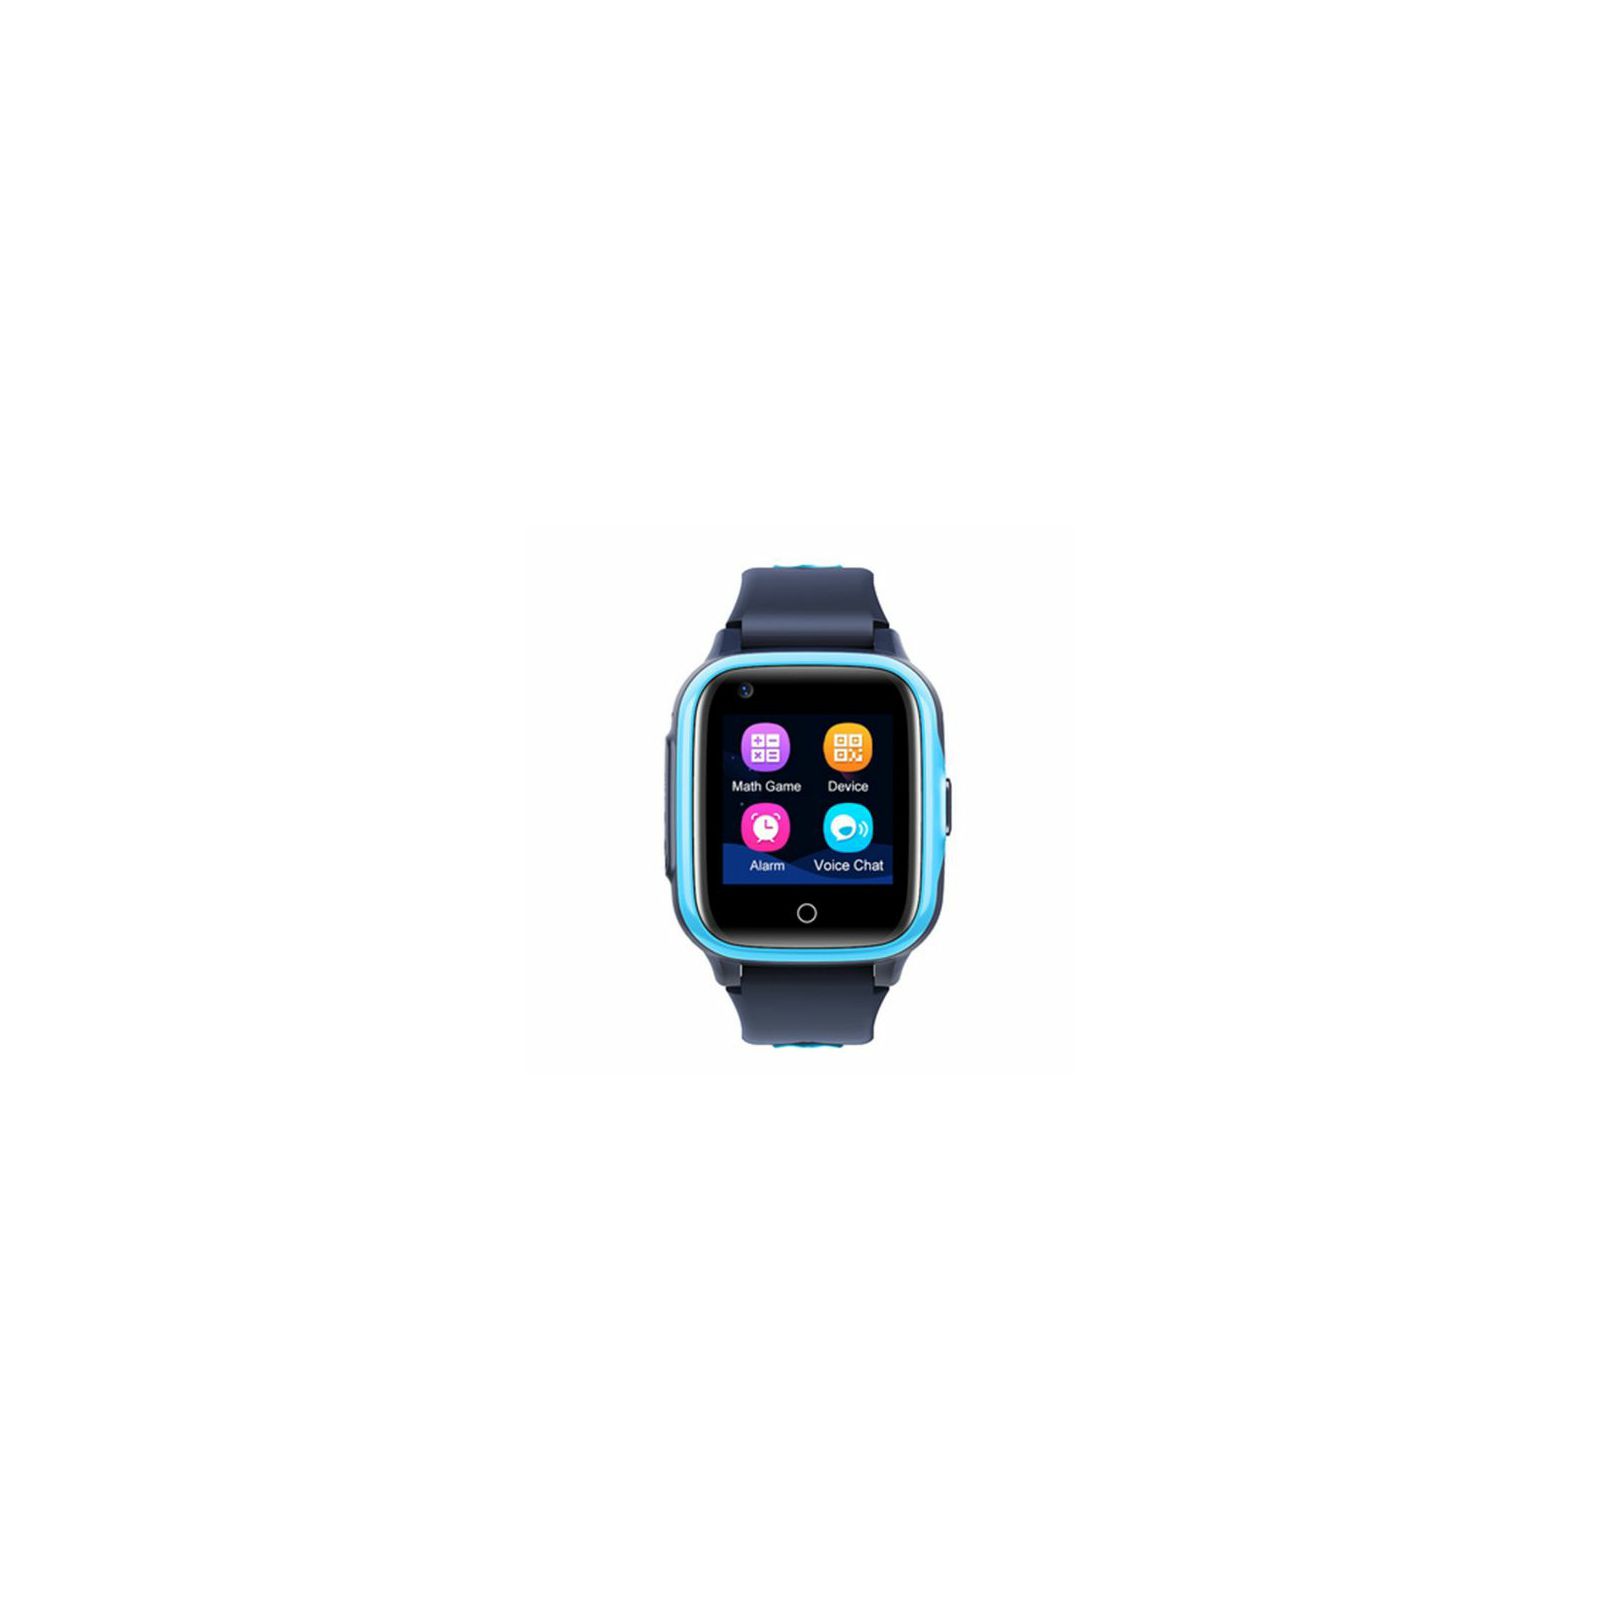 moye-bambino-4g-smart-watch-black-blue-8605042605644_45204.jpg